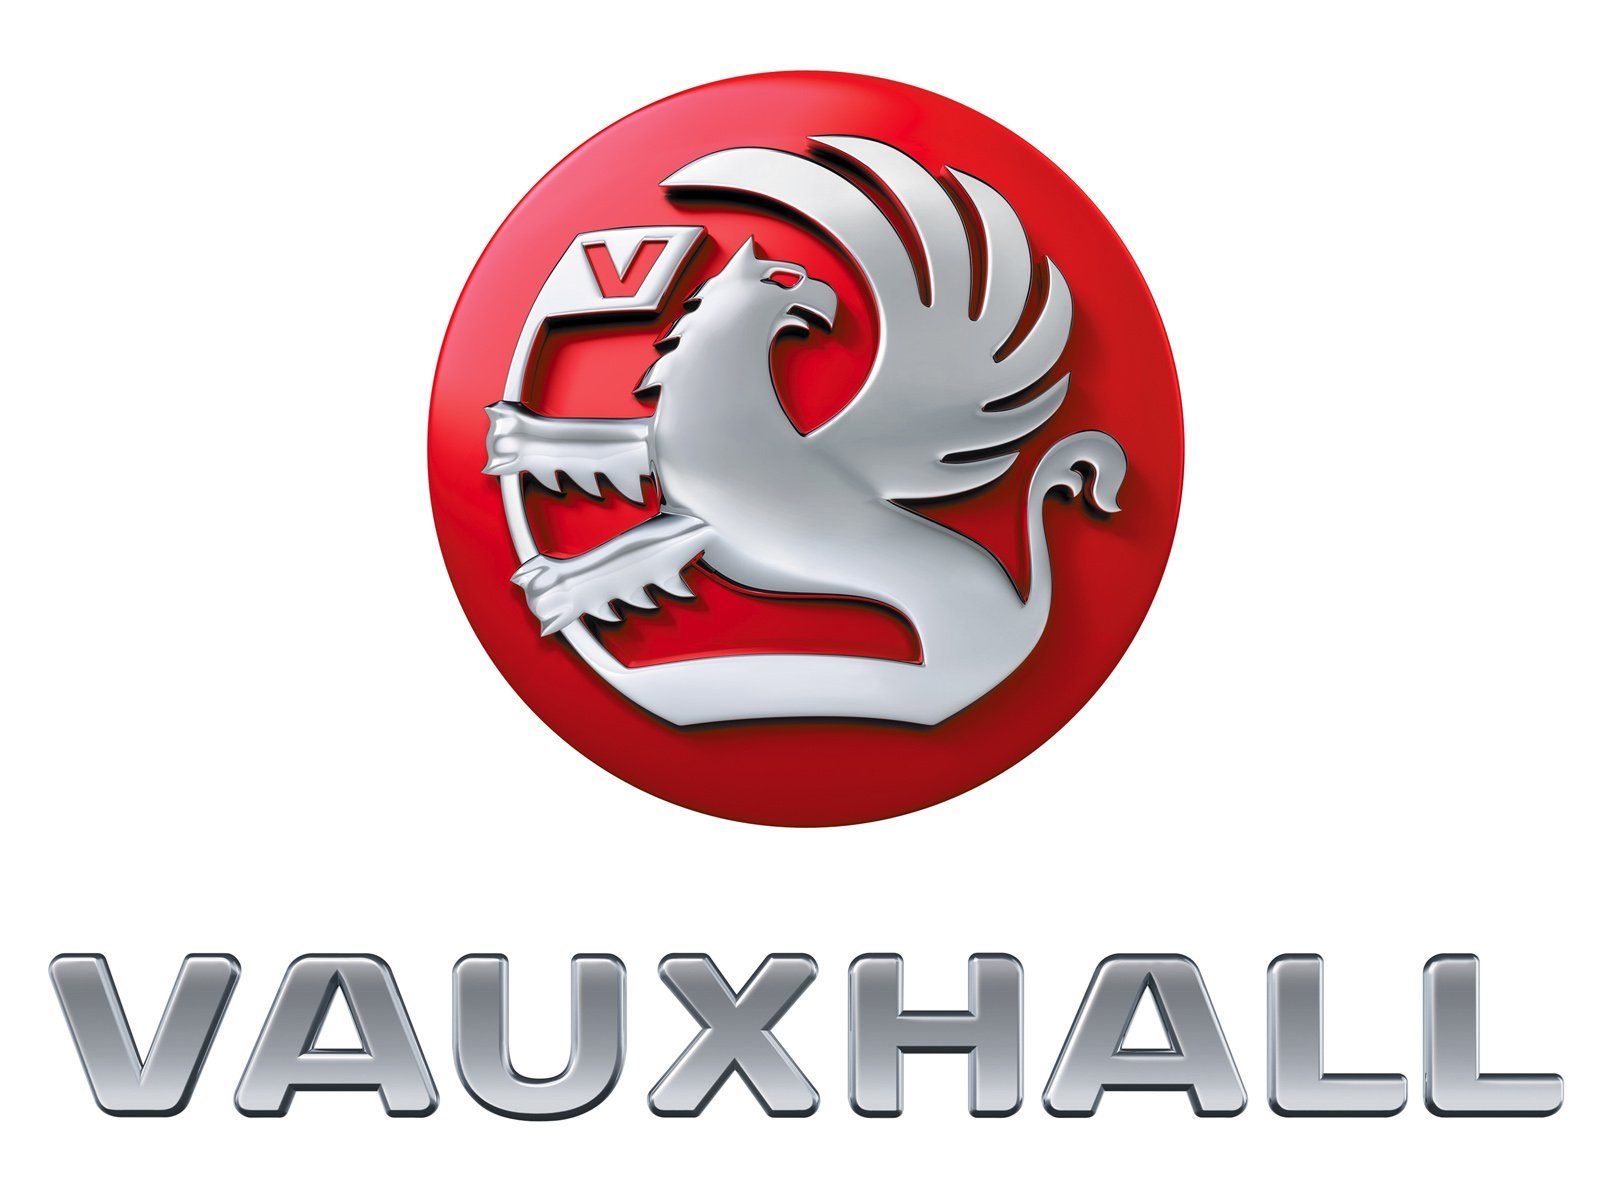 2003 Vauxhall Vx lightning